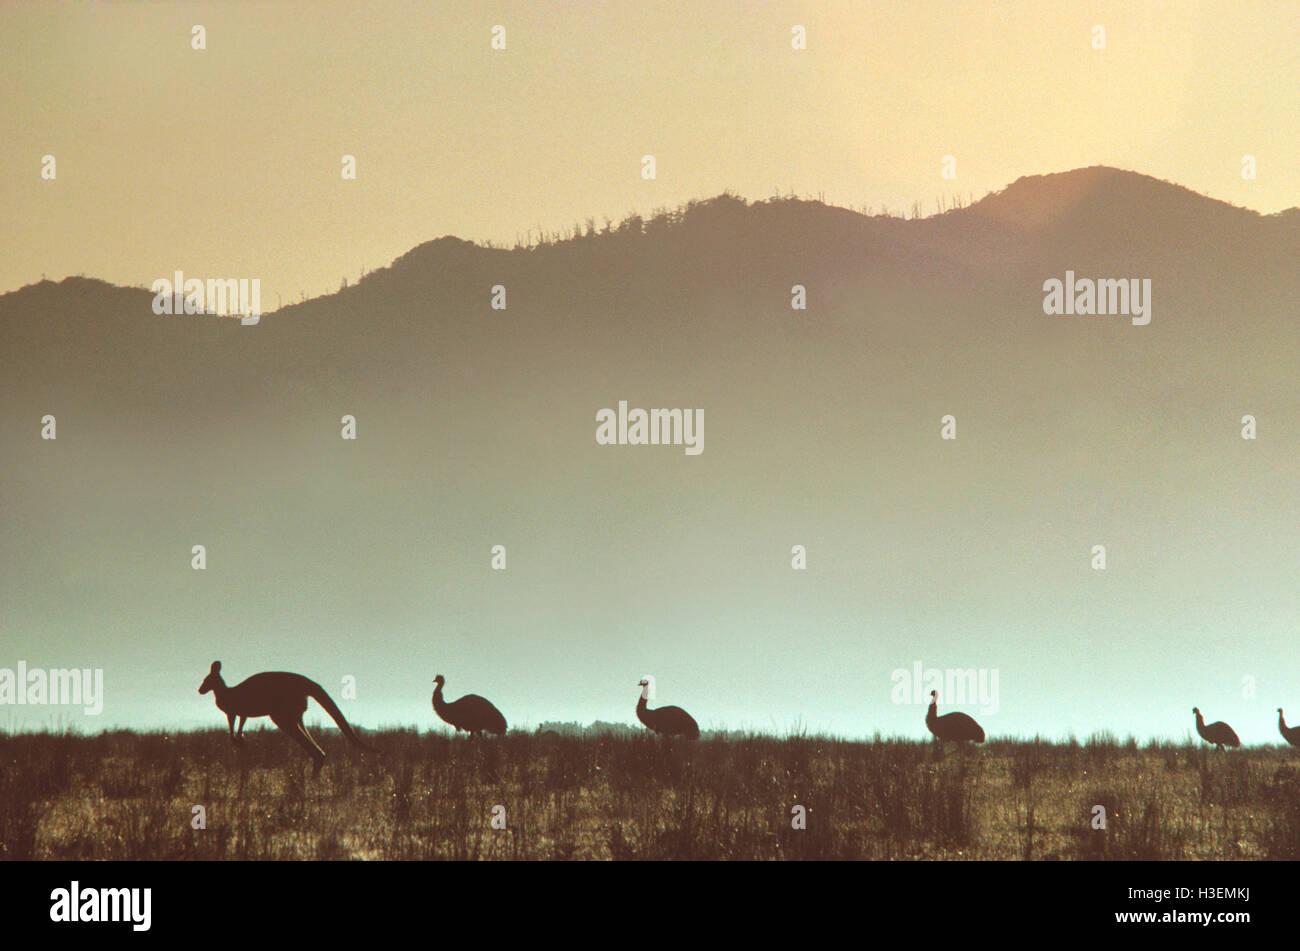 Eastern grey kangaroo (Macropus giganteus), with Emus silhouetted at sunset. Southern Australia Stock Photo